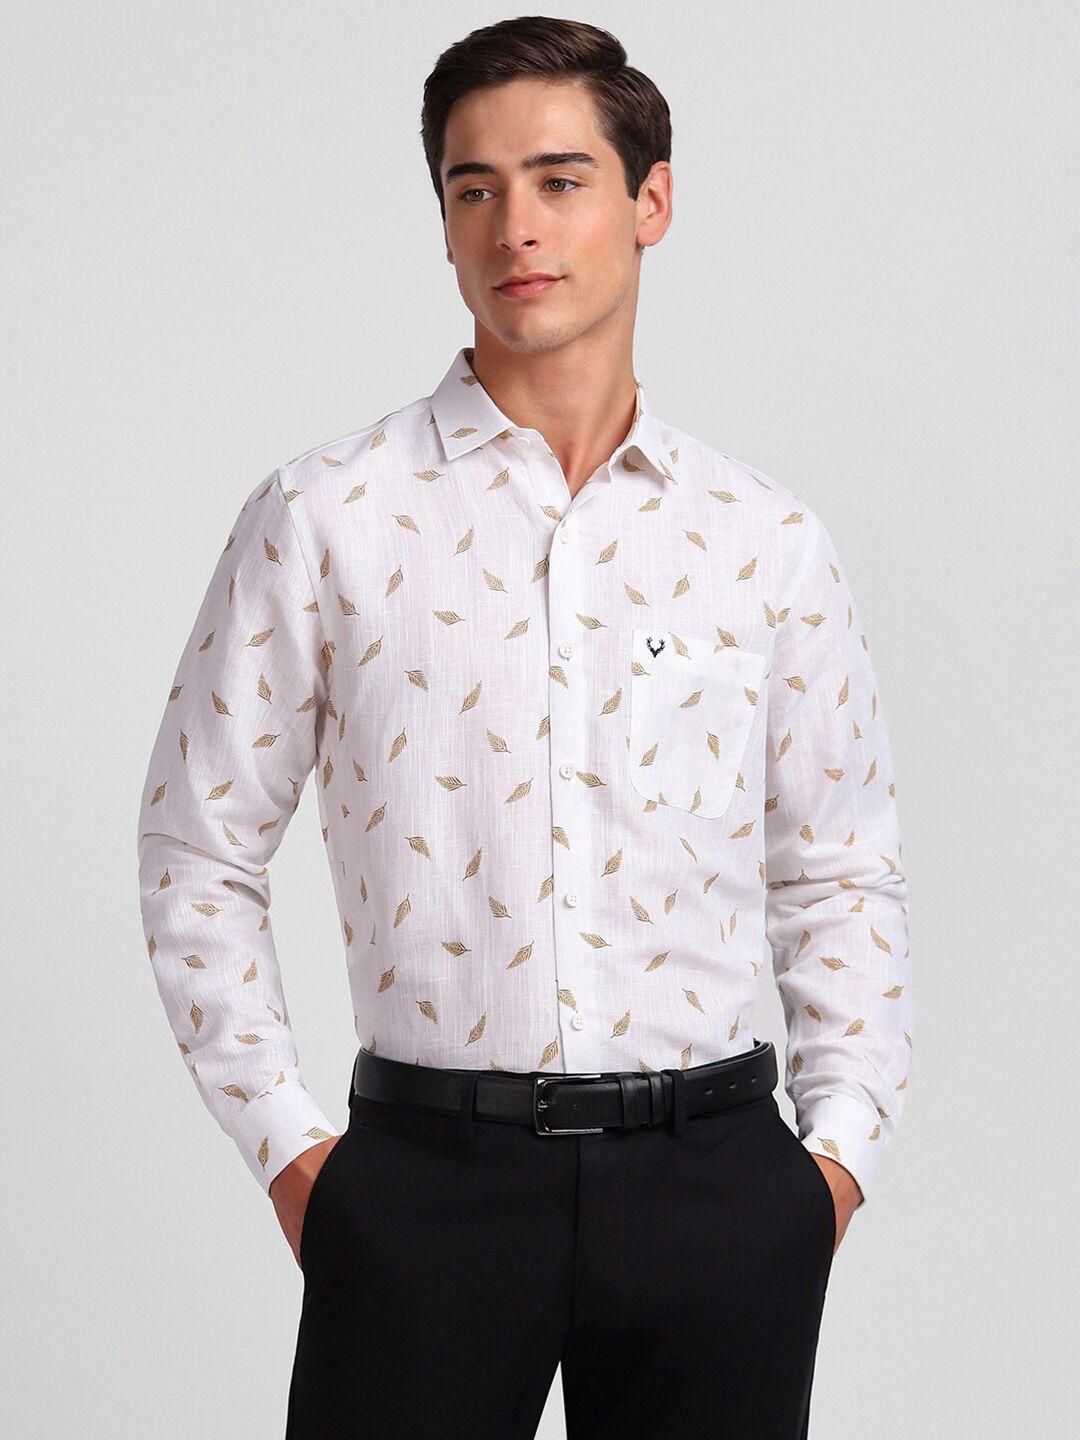 allen solly slim fit conversational printed cotton linen casual shirt